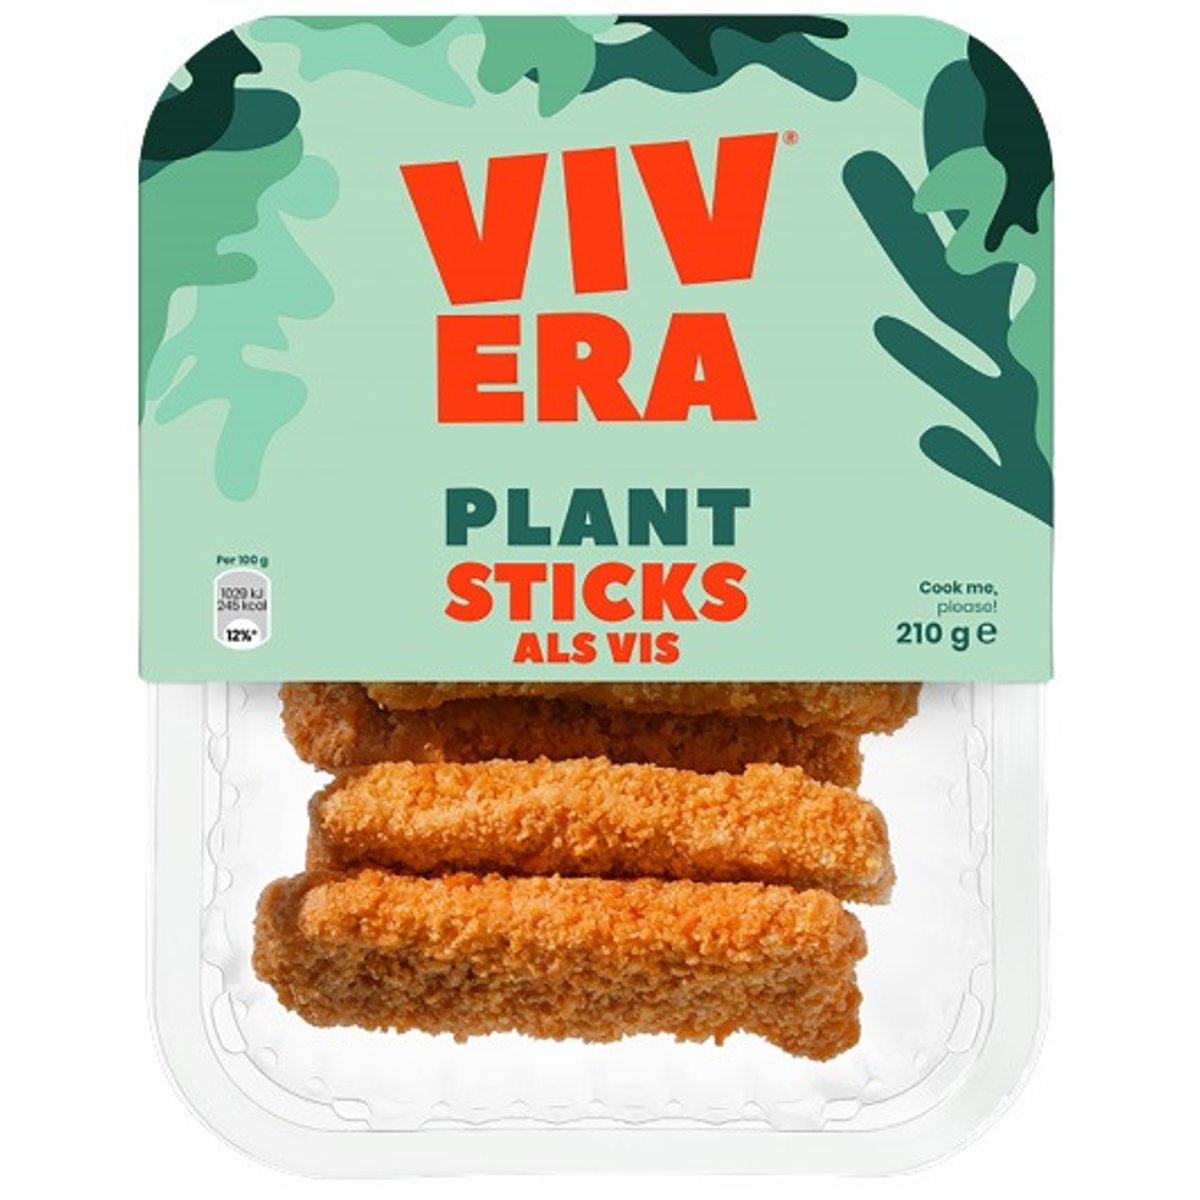 Vivera Vegan fish sticks